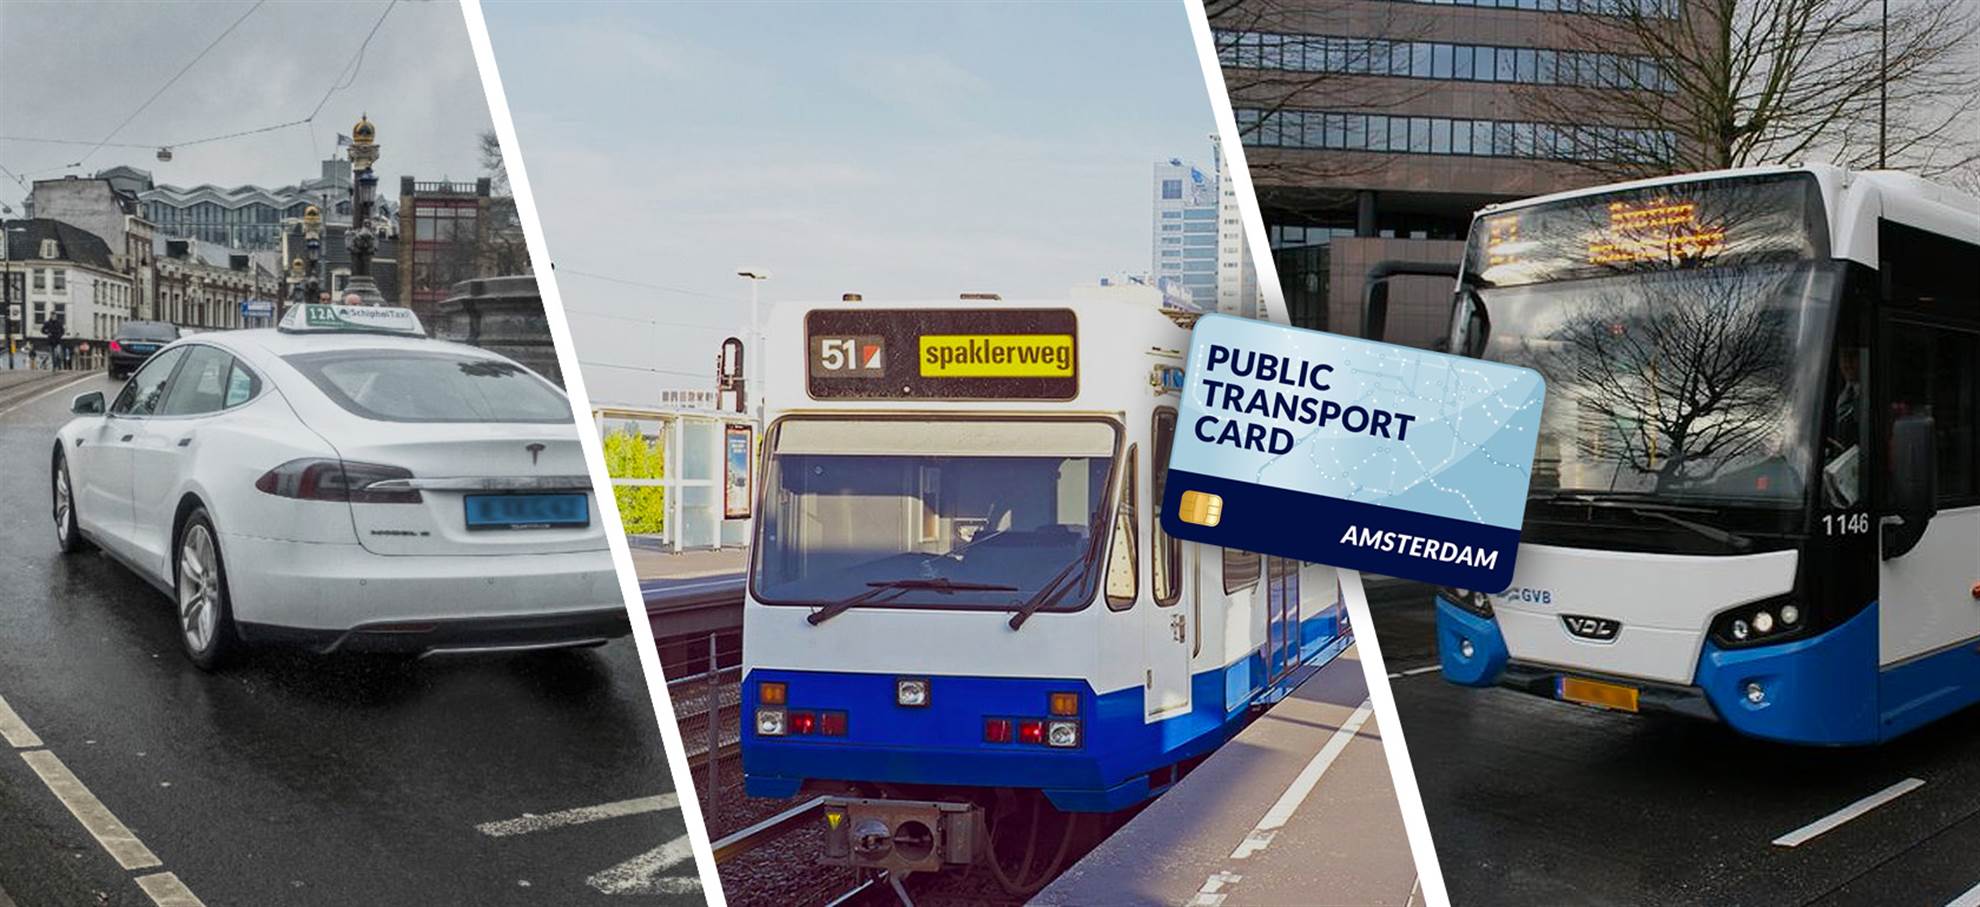 tourist transport card amsterdam